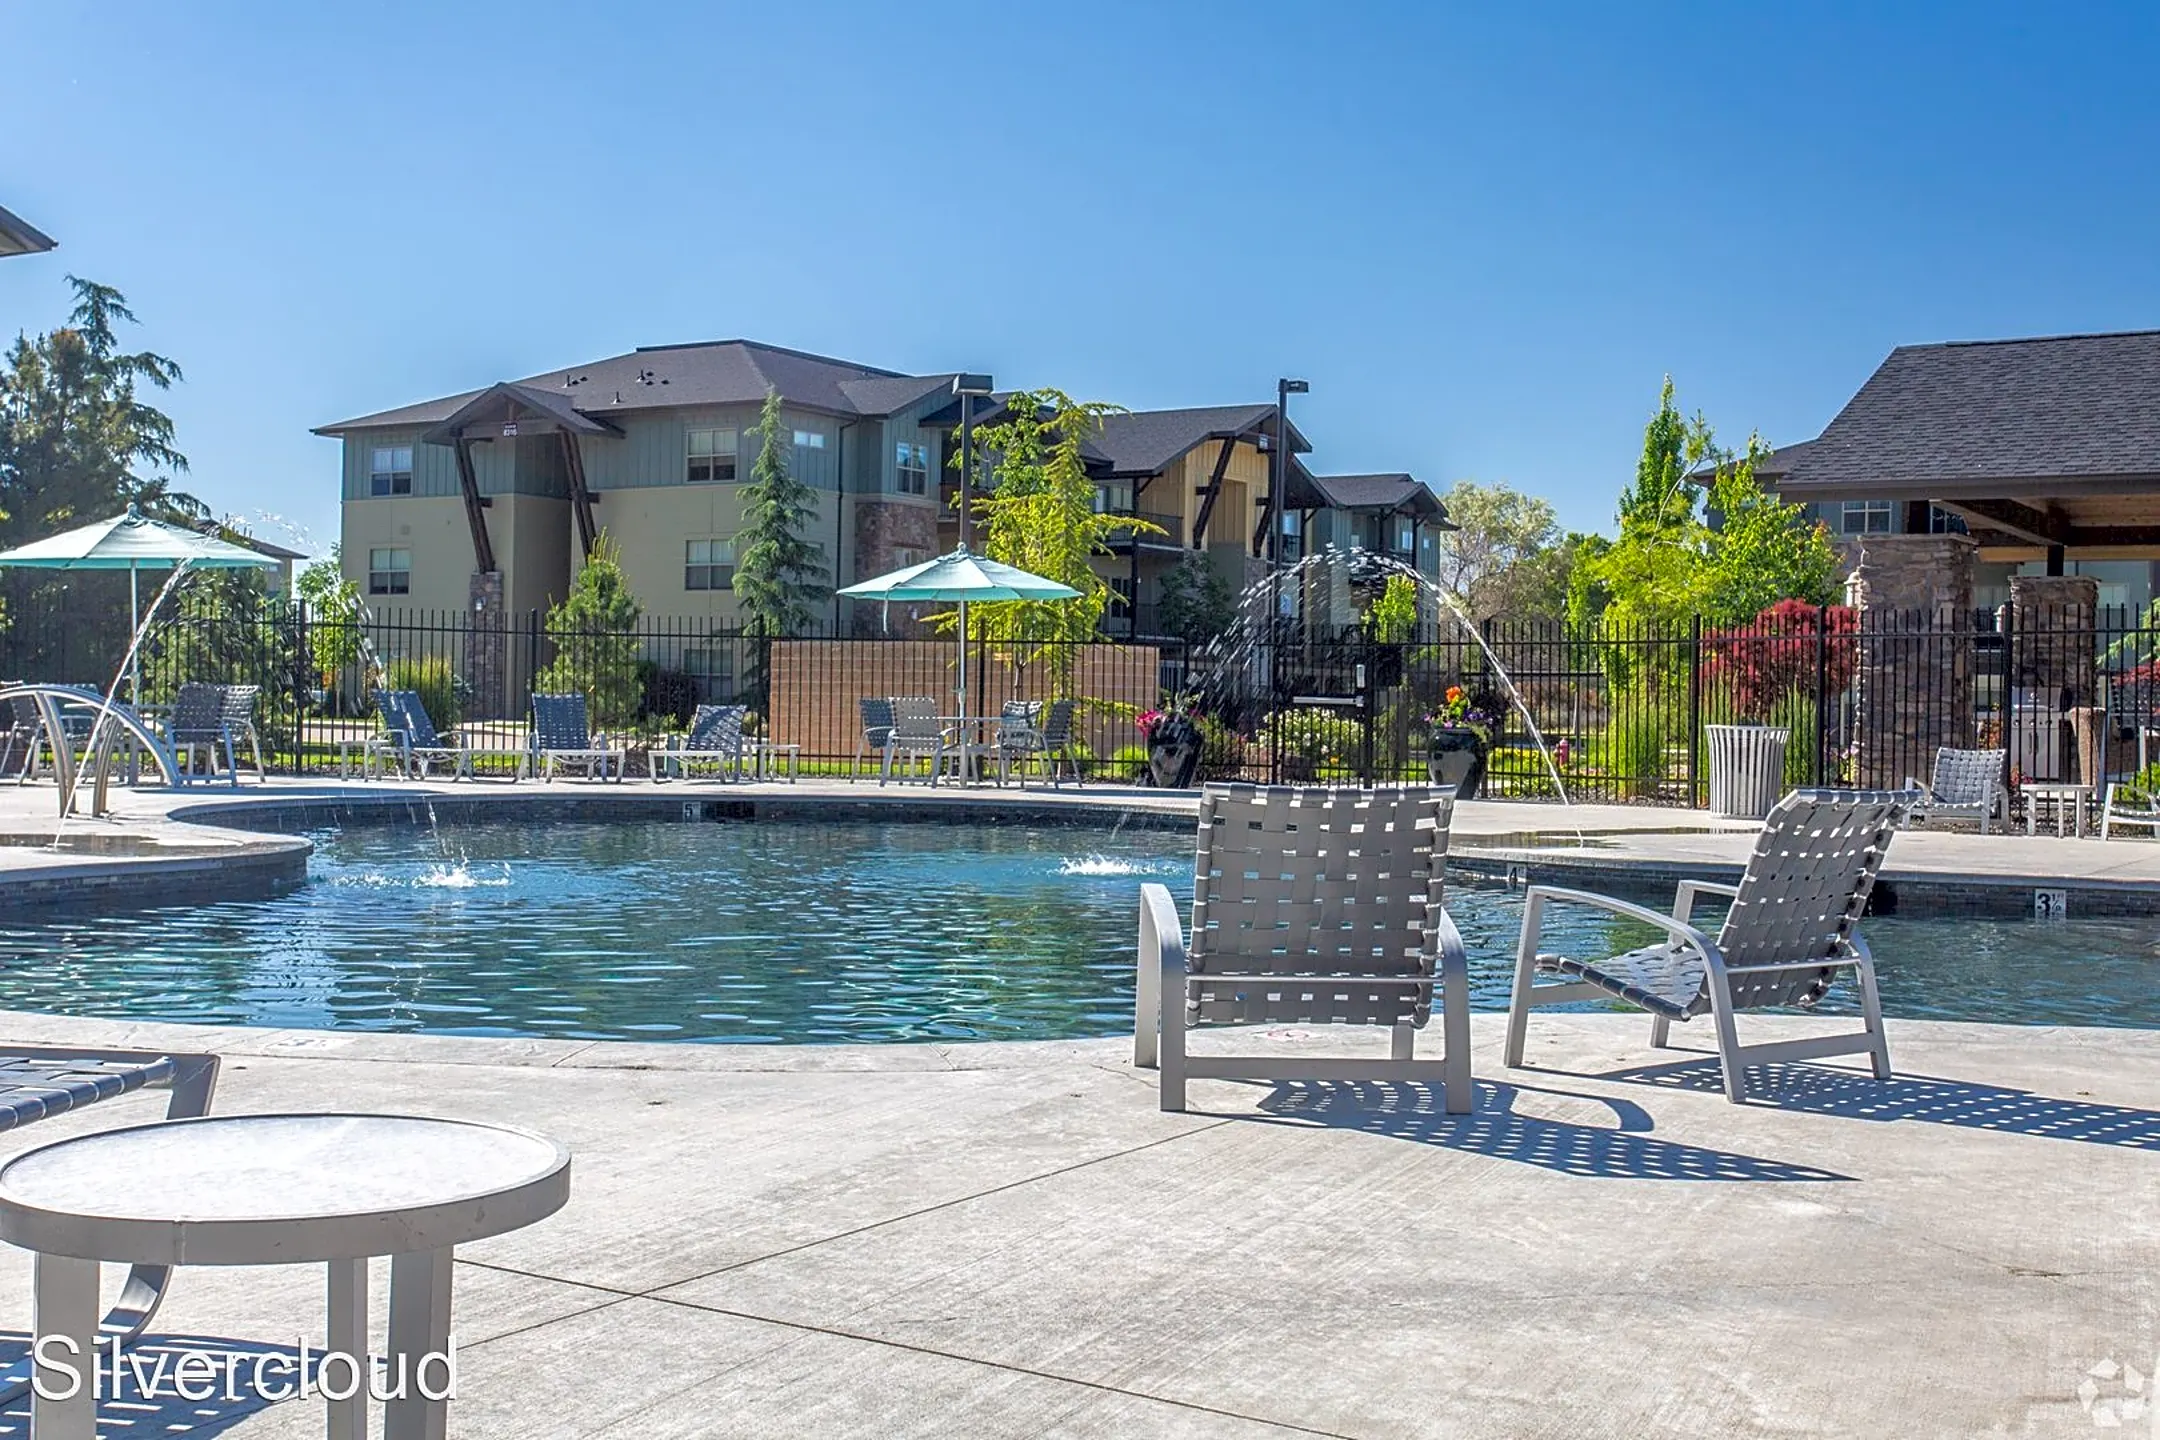 Pool - Retreat at Silvercloud - Boise, ID